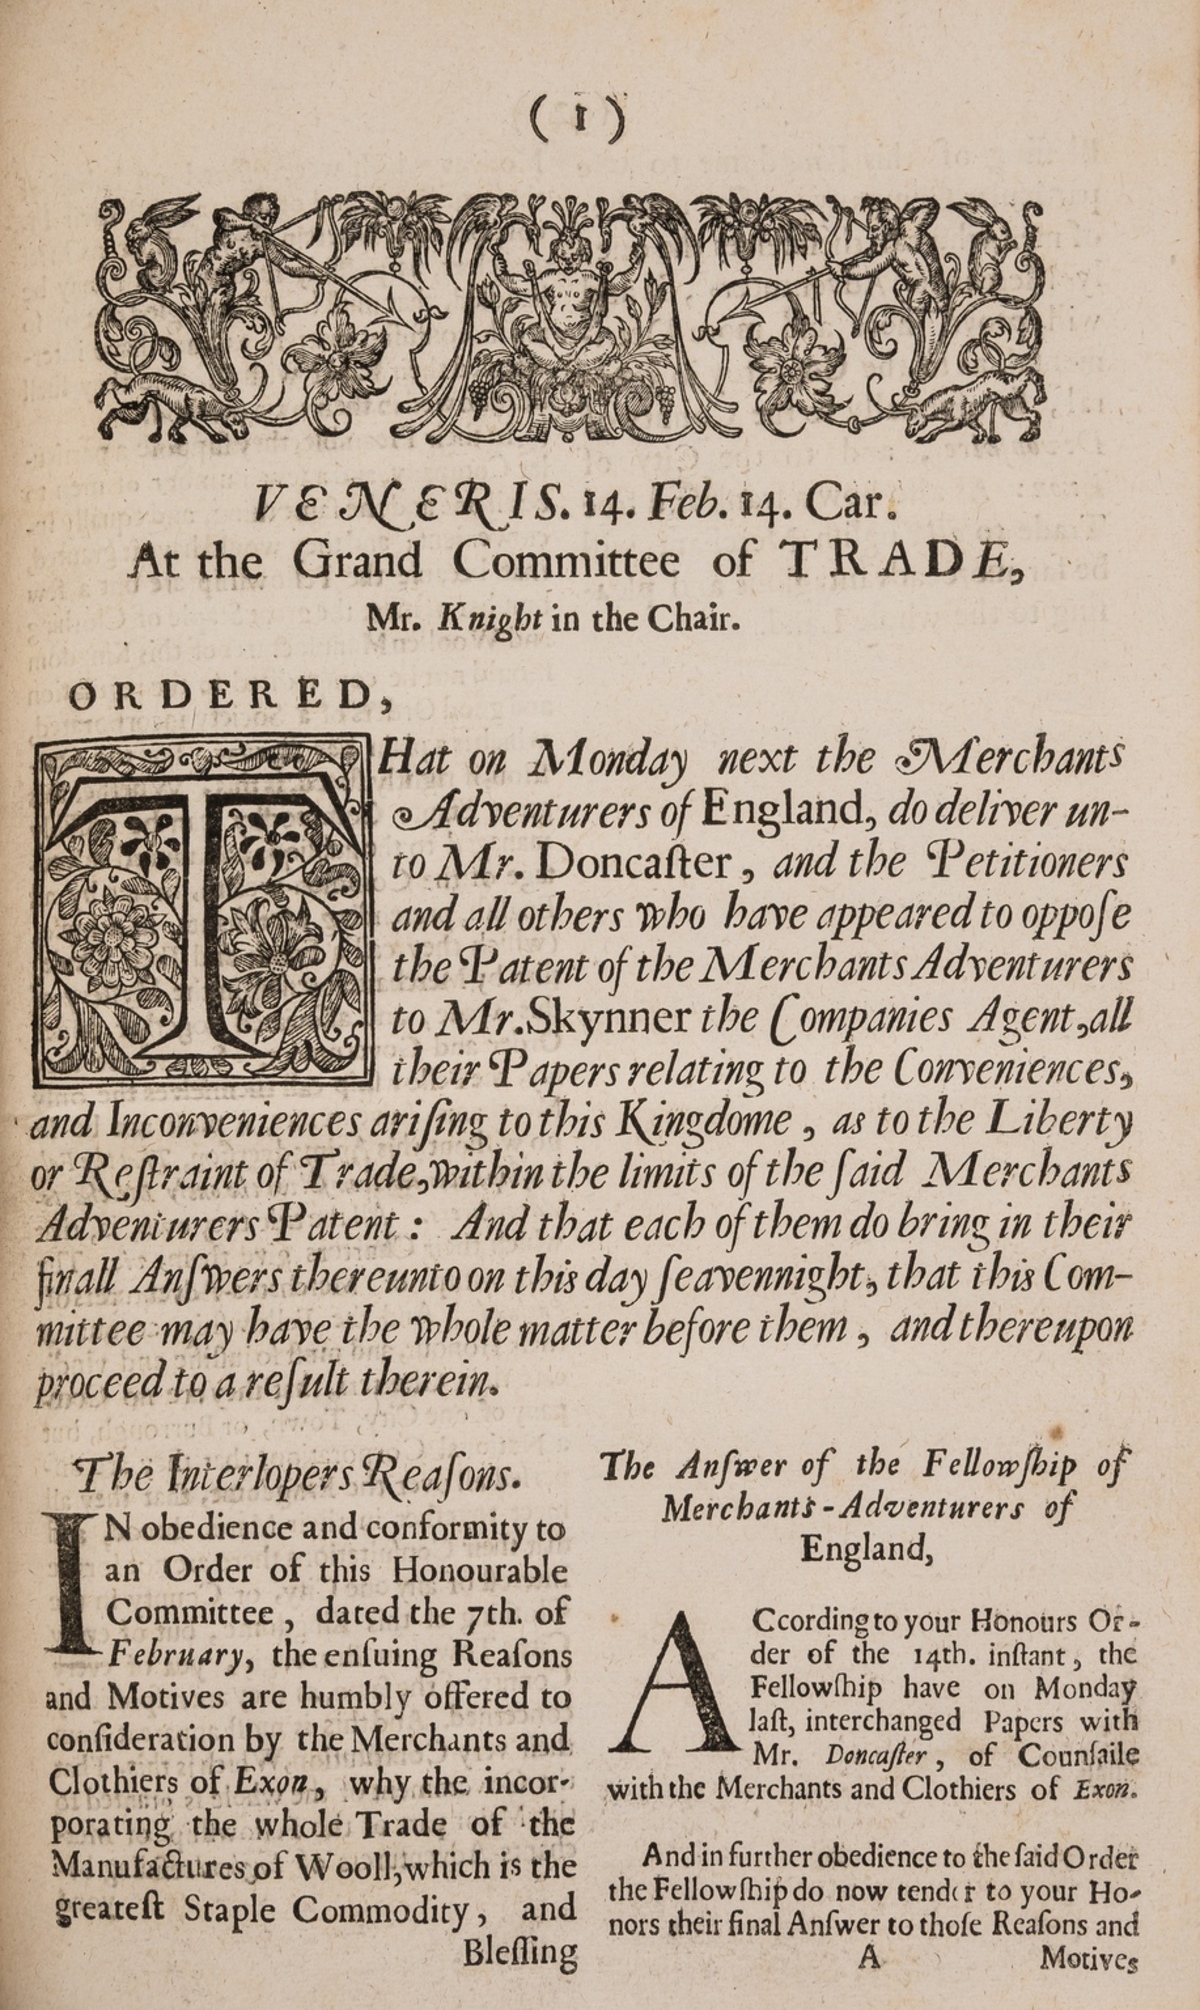 Trade.- Merchants Adventurers of England. Veneris.14. Feb. 14. Car. At the Grand Committee of …